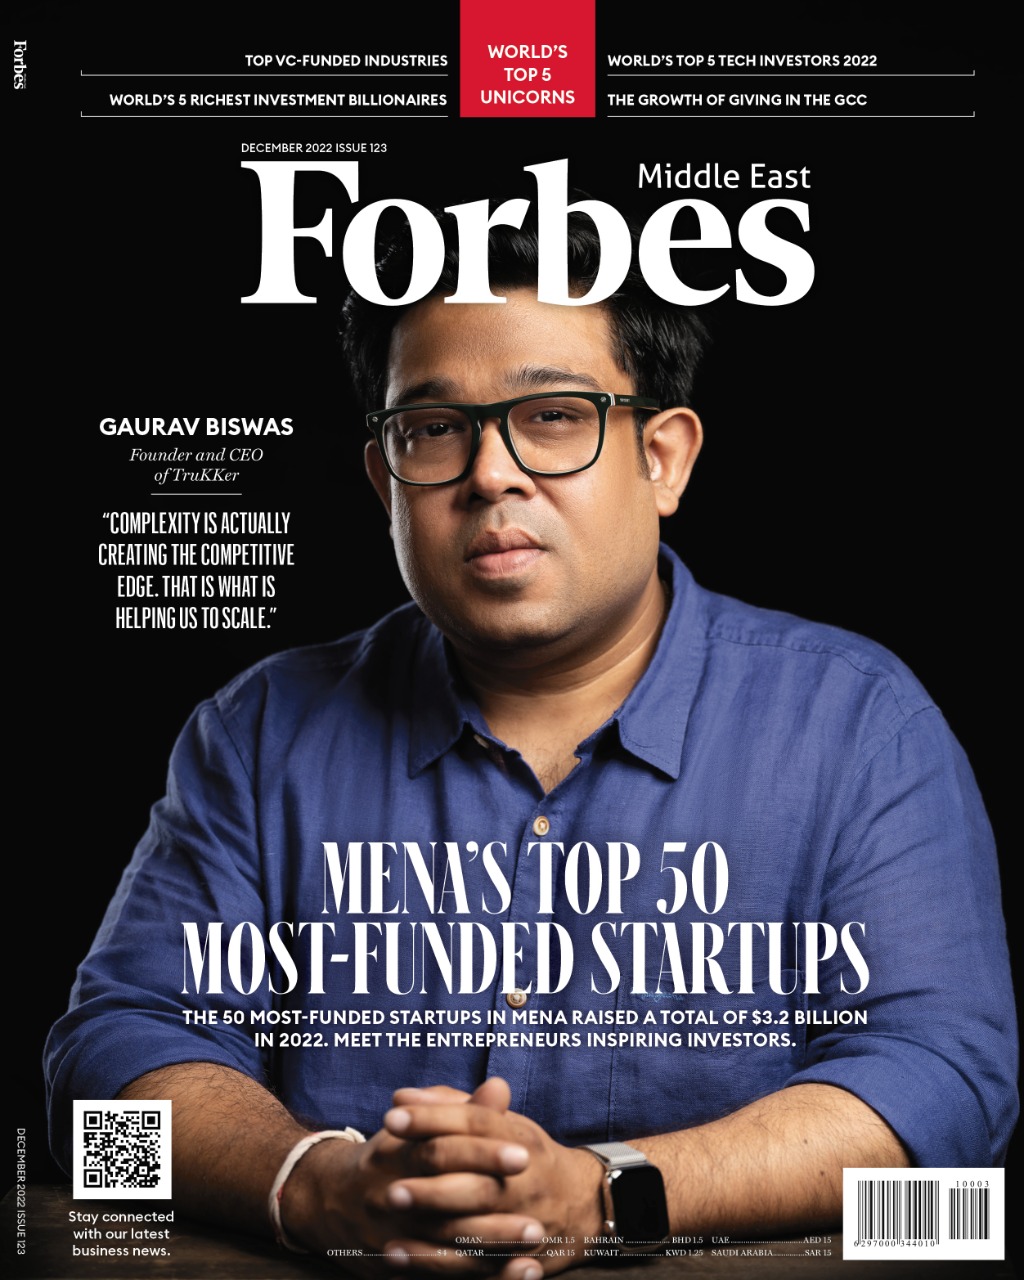 Gaurav Biswas, Founder & CEO, TruKKer on Forbes Middle East cover